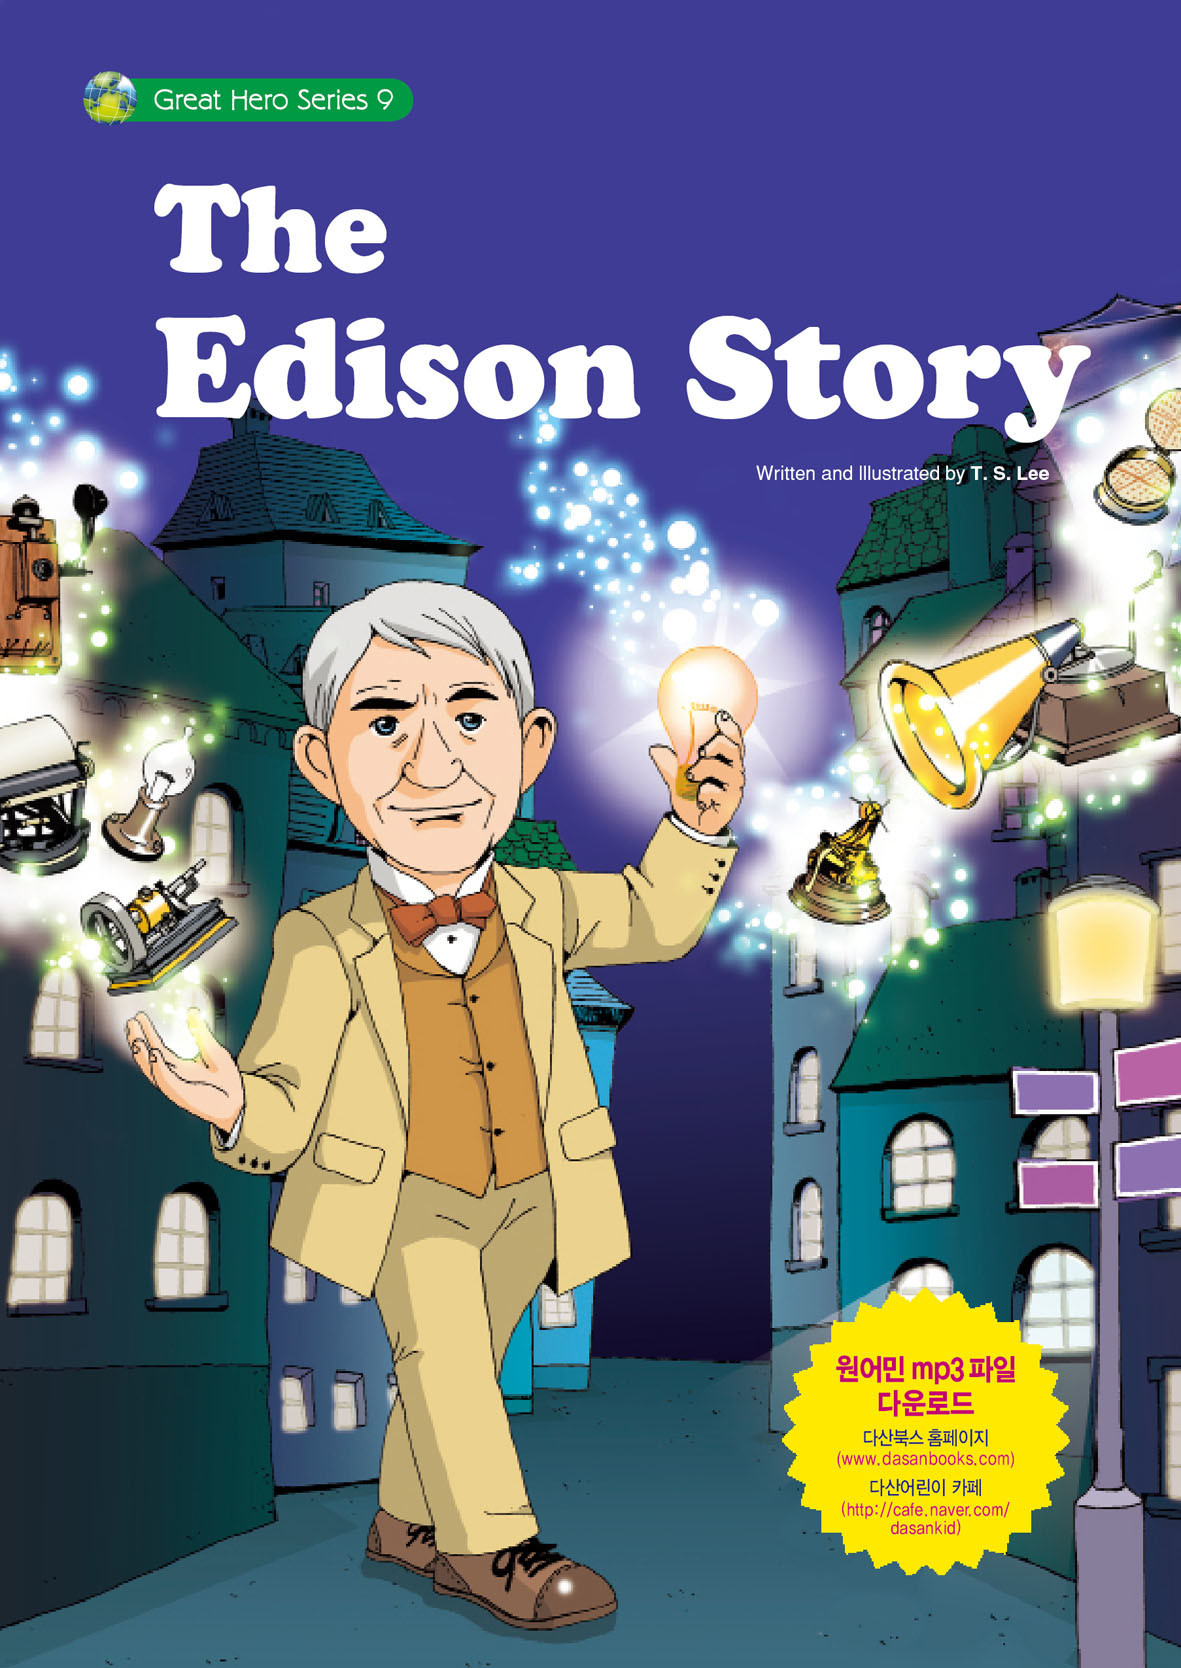 Great Hero Series 09. The Thomas Edison Story